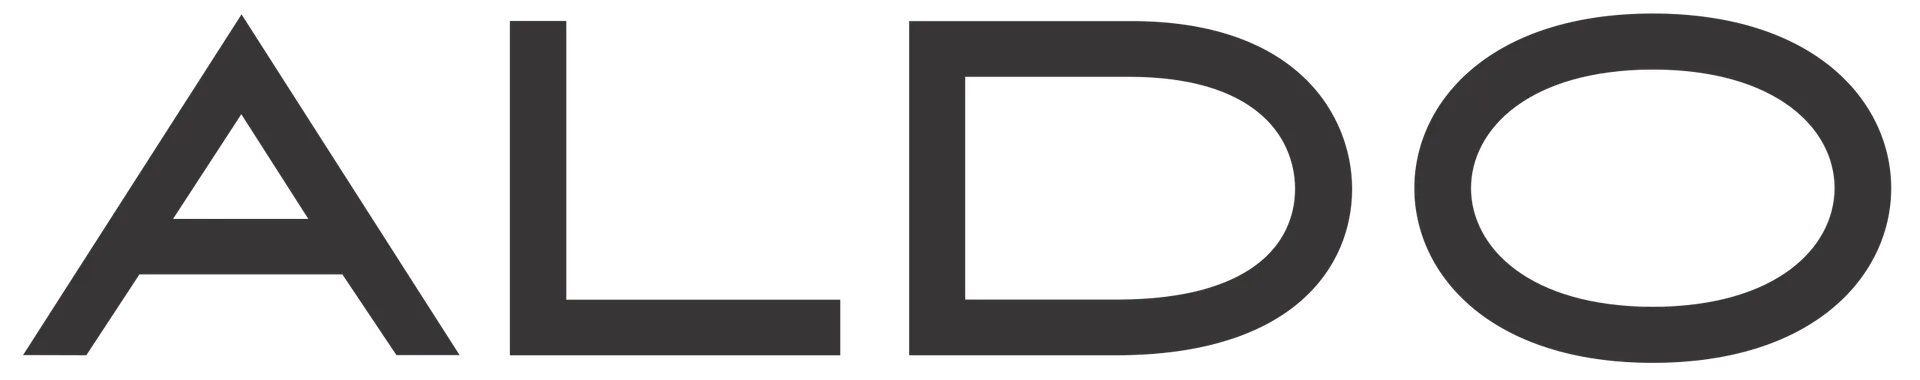 ALDO logo. Current weekly ad